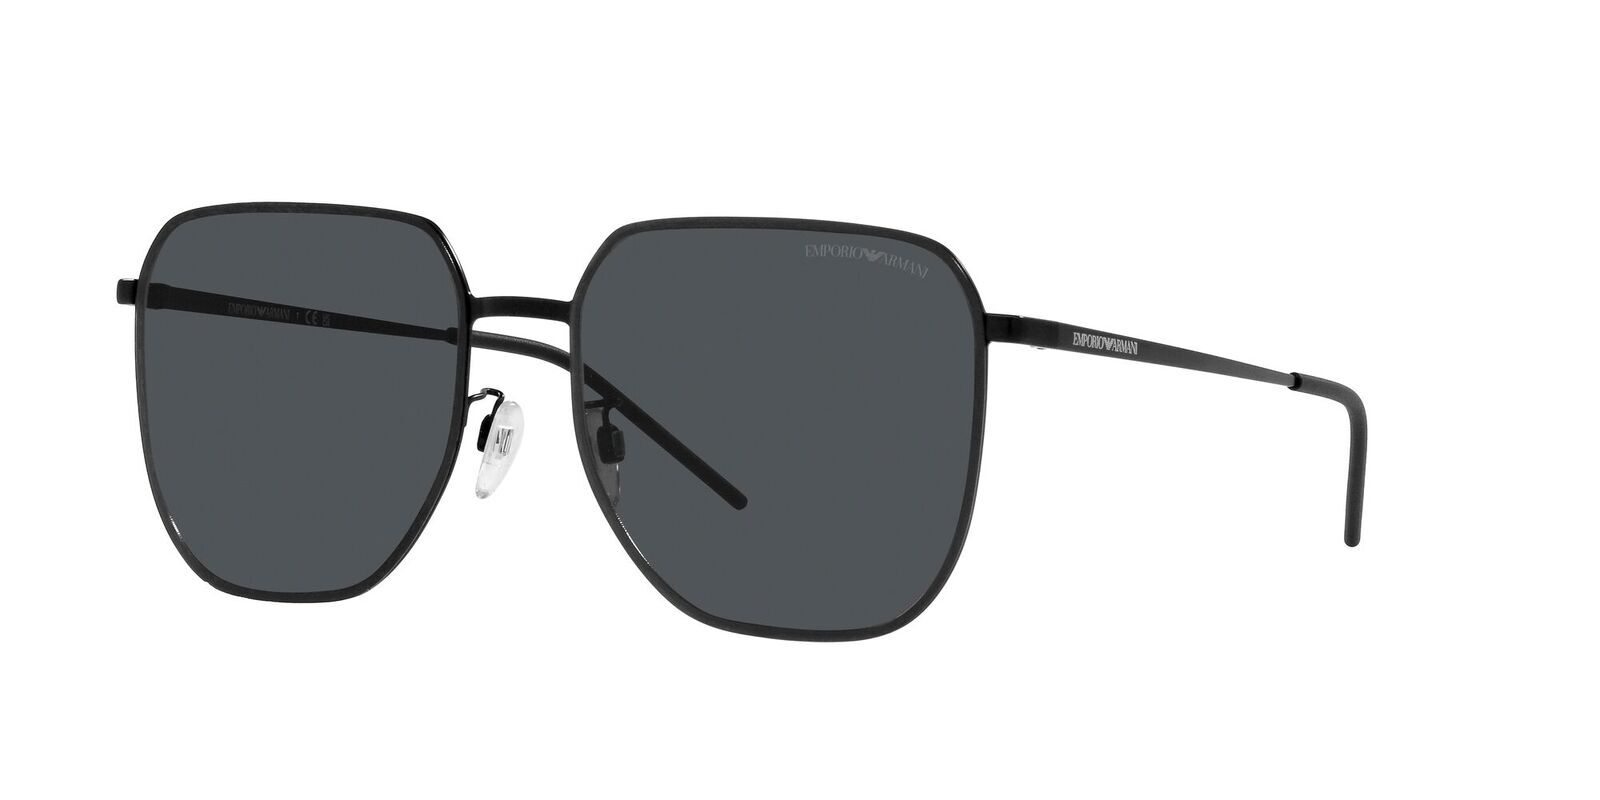 Emporio Armani Men's EA4115 5017/1W Black w/ two Clip-ons Sunglasses  52-18-145 | EyeSpecs.com